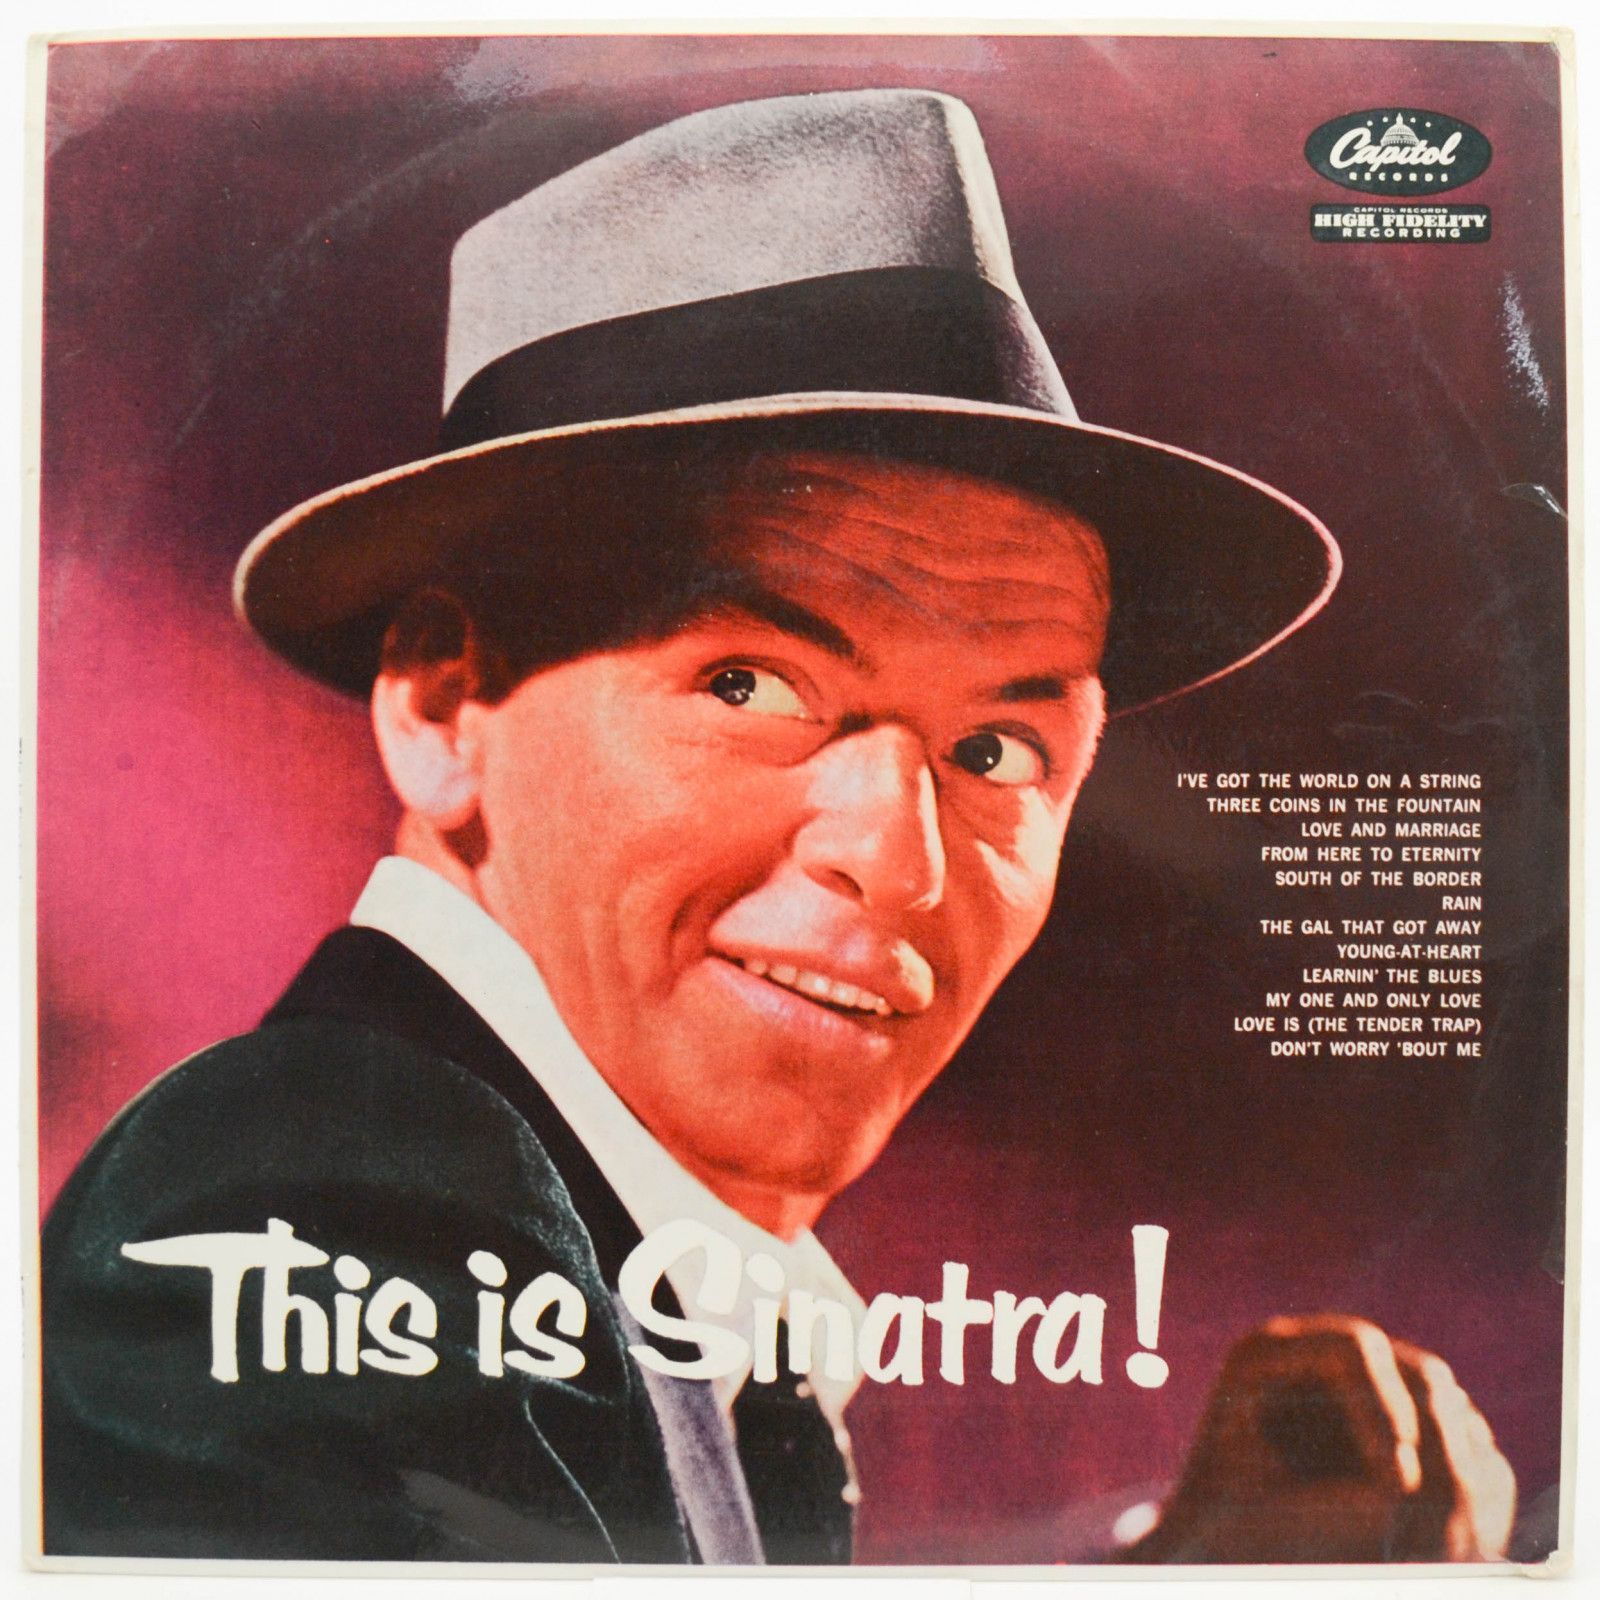 Frank Sinatra — This Is Sinatra! (UK), 1956